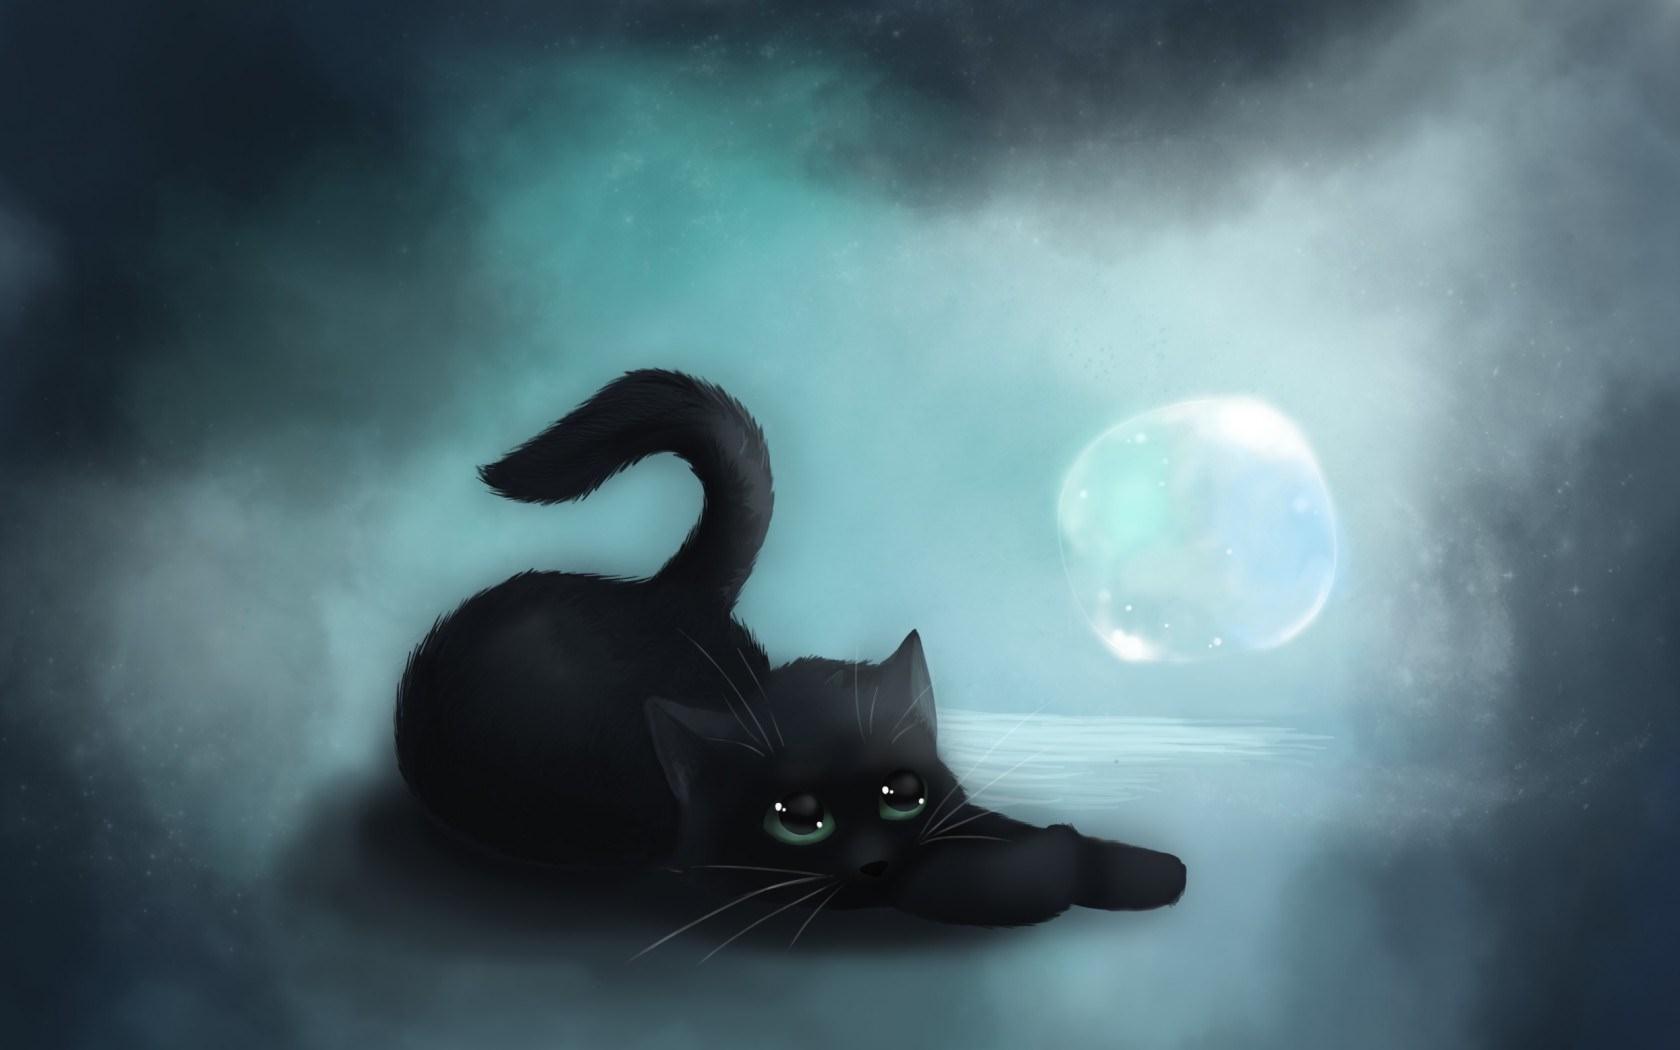 Cute Black Cat With Green Eyes Wallpaper - Asq Wallpaper